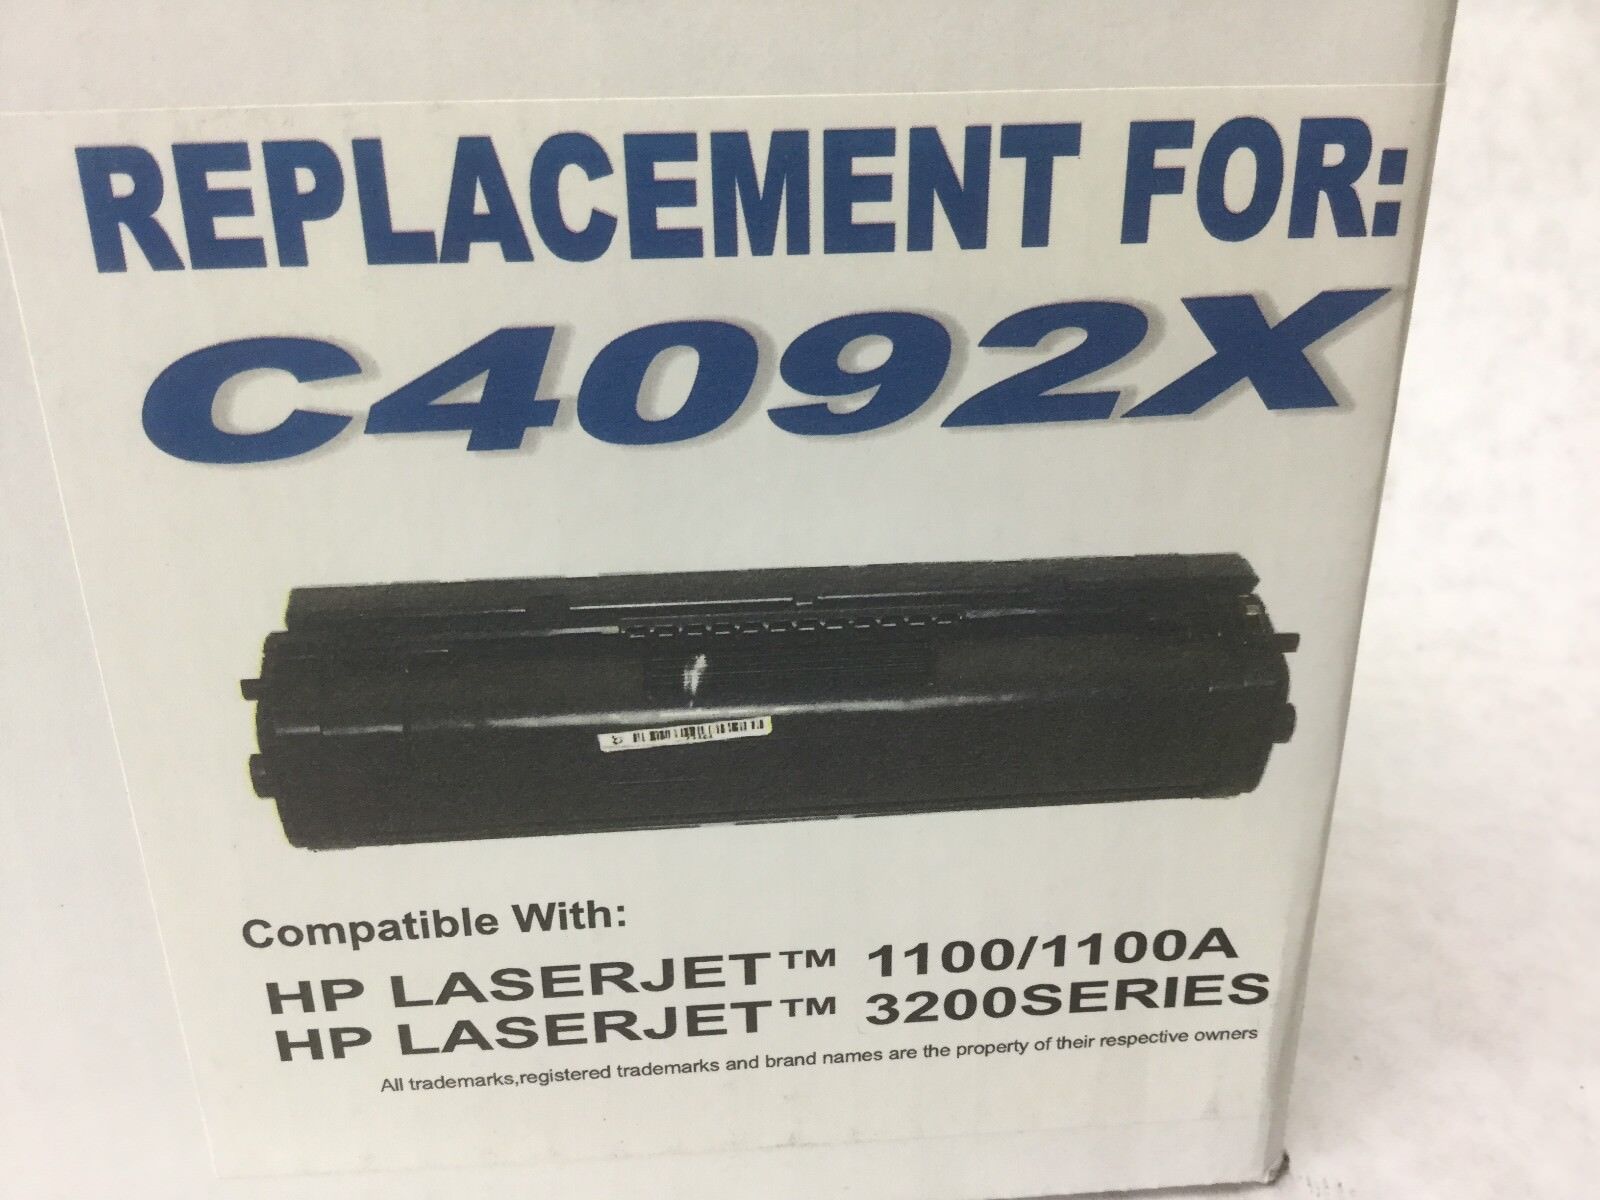 Toner Cartridge Black Compatible w/ C4092X (HP LaserJet 1100/1100A/3200 Series)